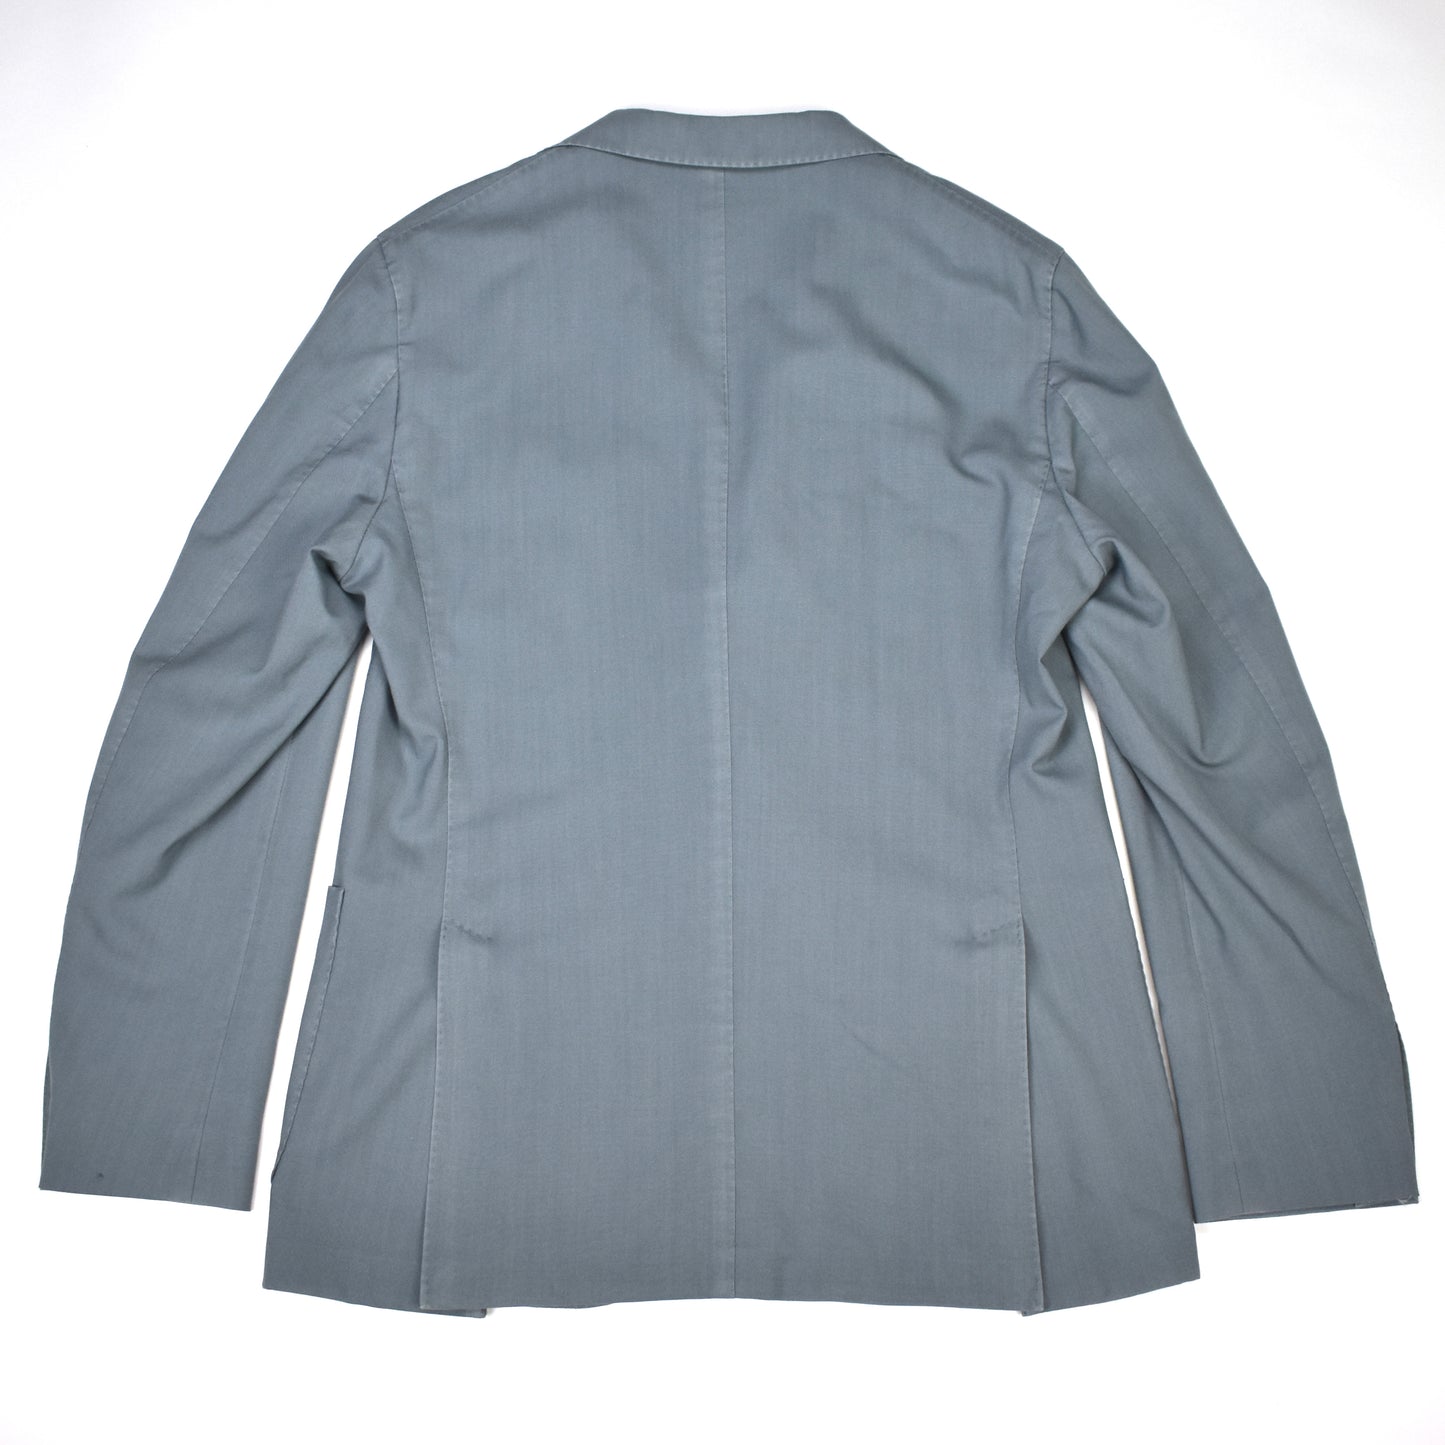 Boglioli - Slate Gray 100% Wool K Travel Suit